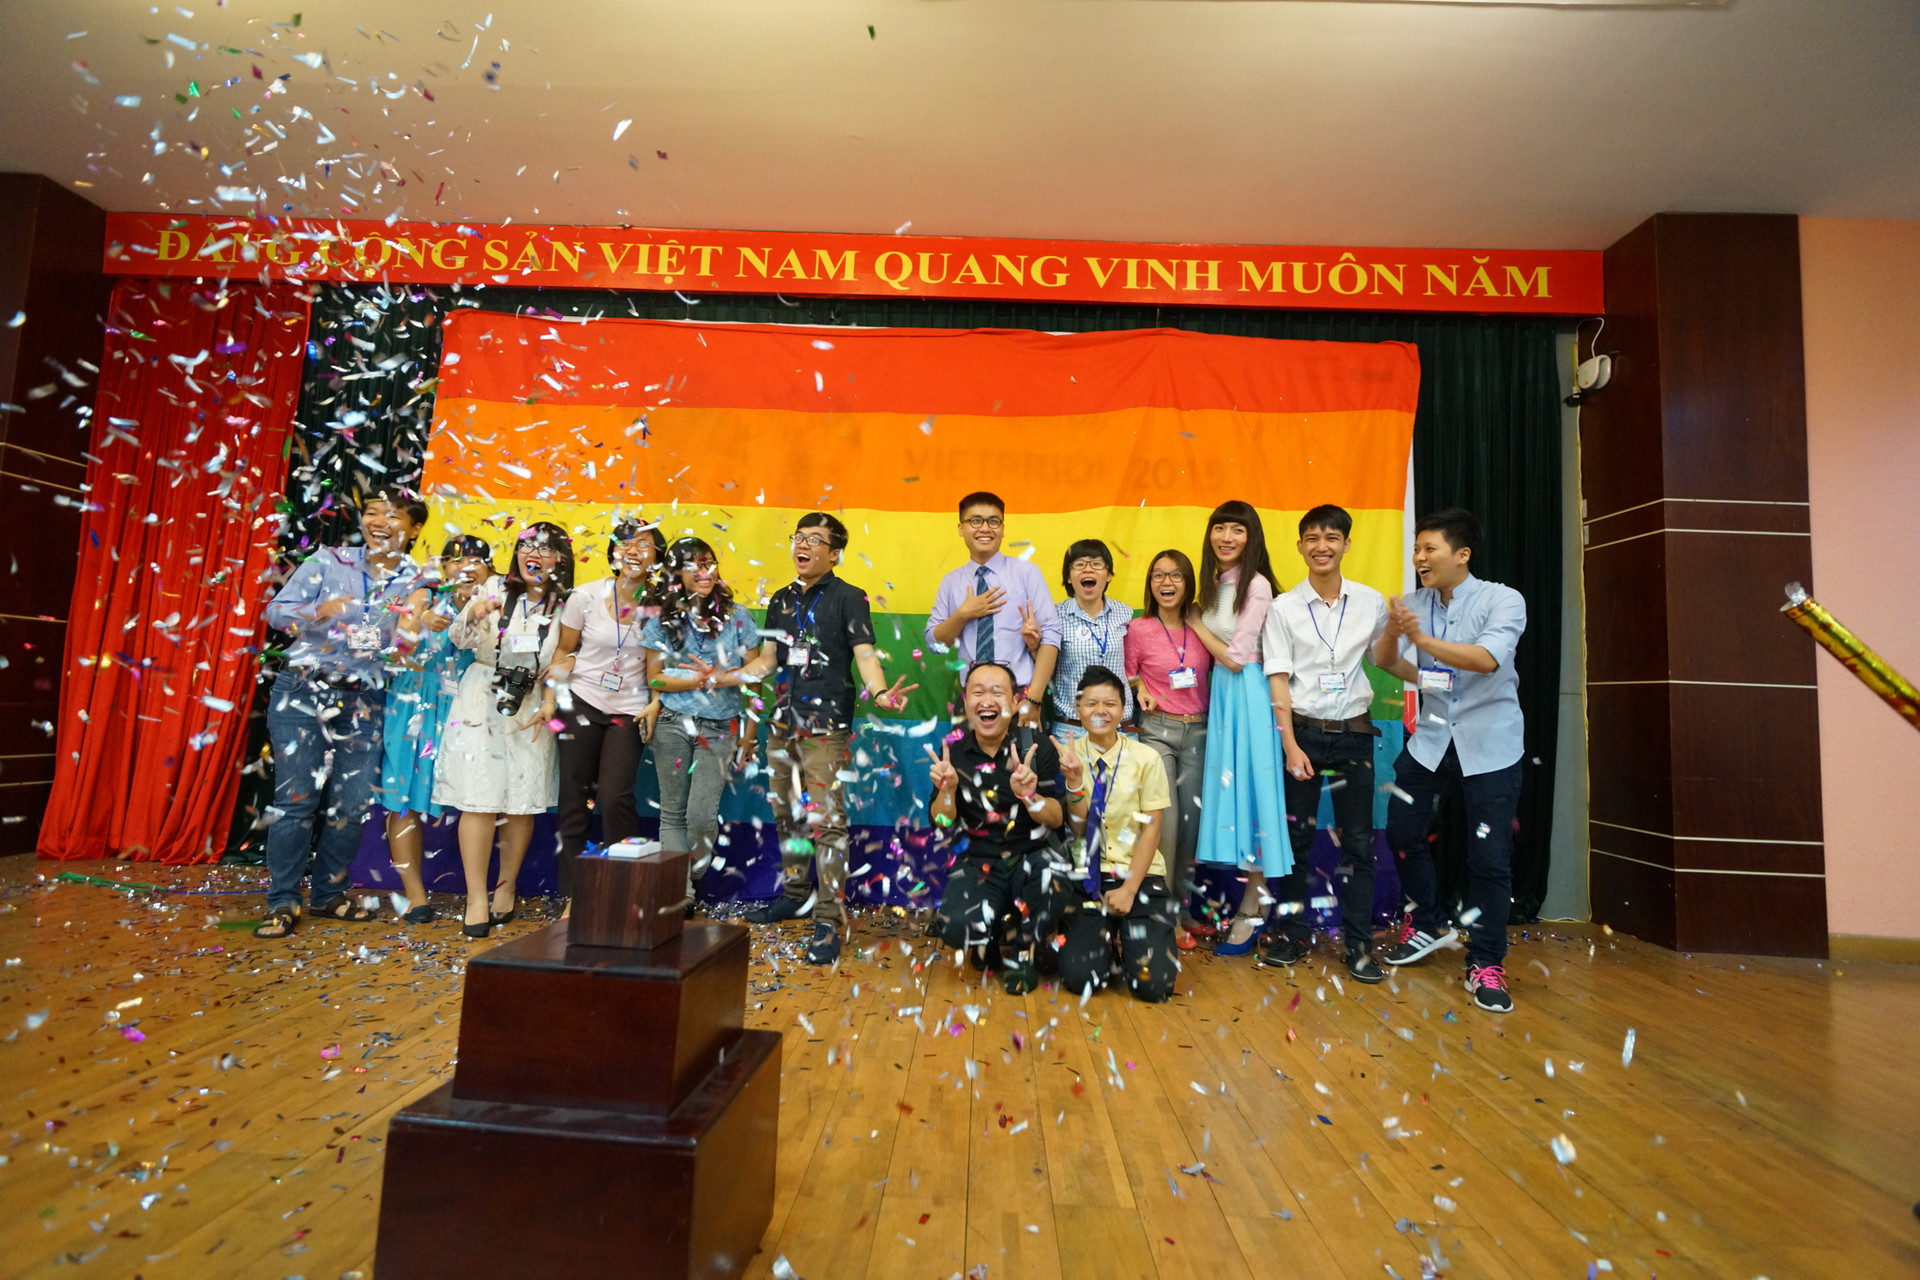 Tu hao dong tinh, Viet Pride 2015, LGBT, Ngay hoi tu hao dong tinh